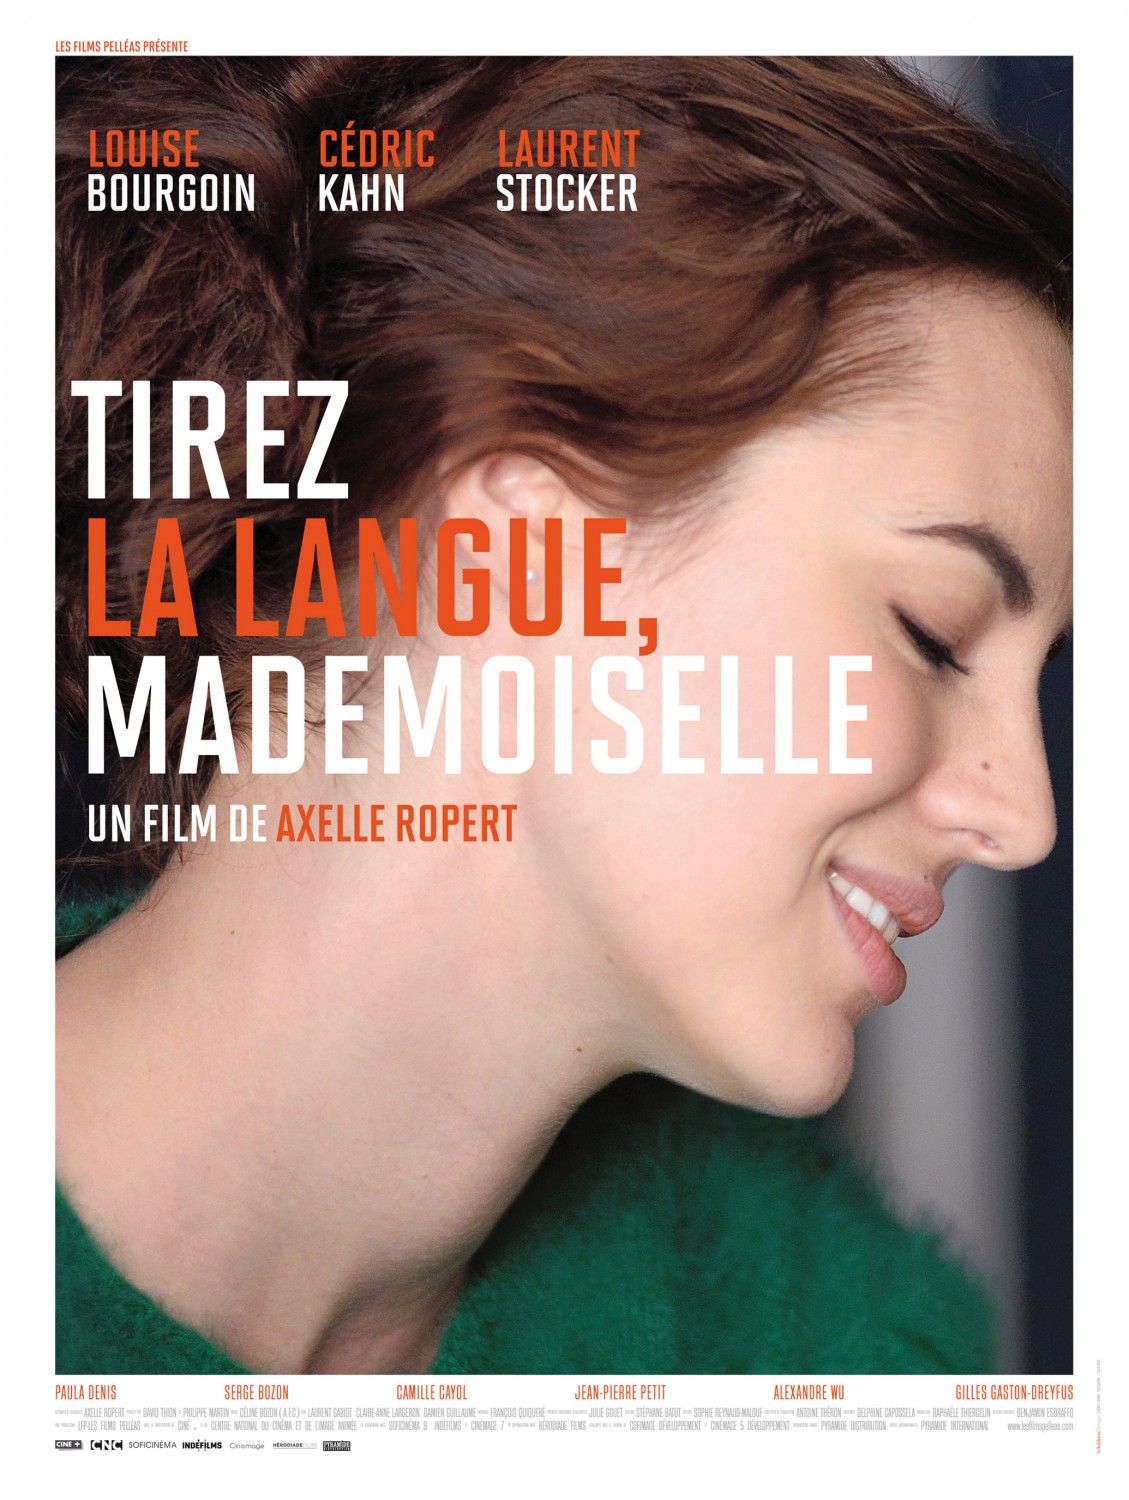 Extra Large Movie Poster Image for Tirez la langue, mademoiselle 